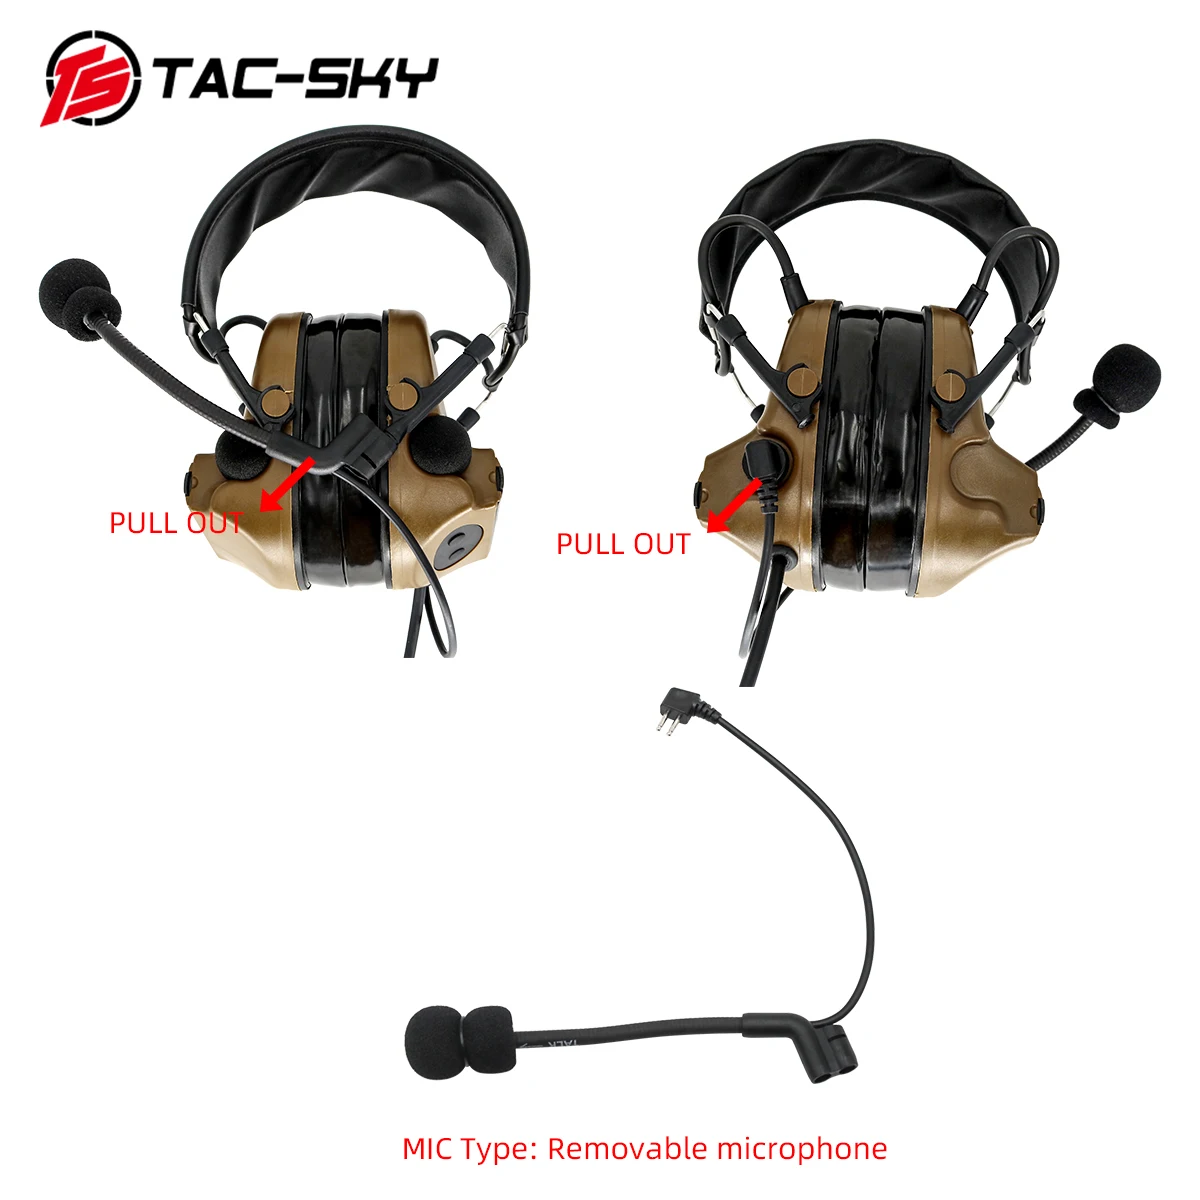 COMTAC TAC-SKY comtac ii silicone earmuffs tactical comtac noise reduction pickup military tactical headphones comtac ii